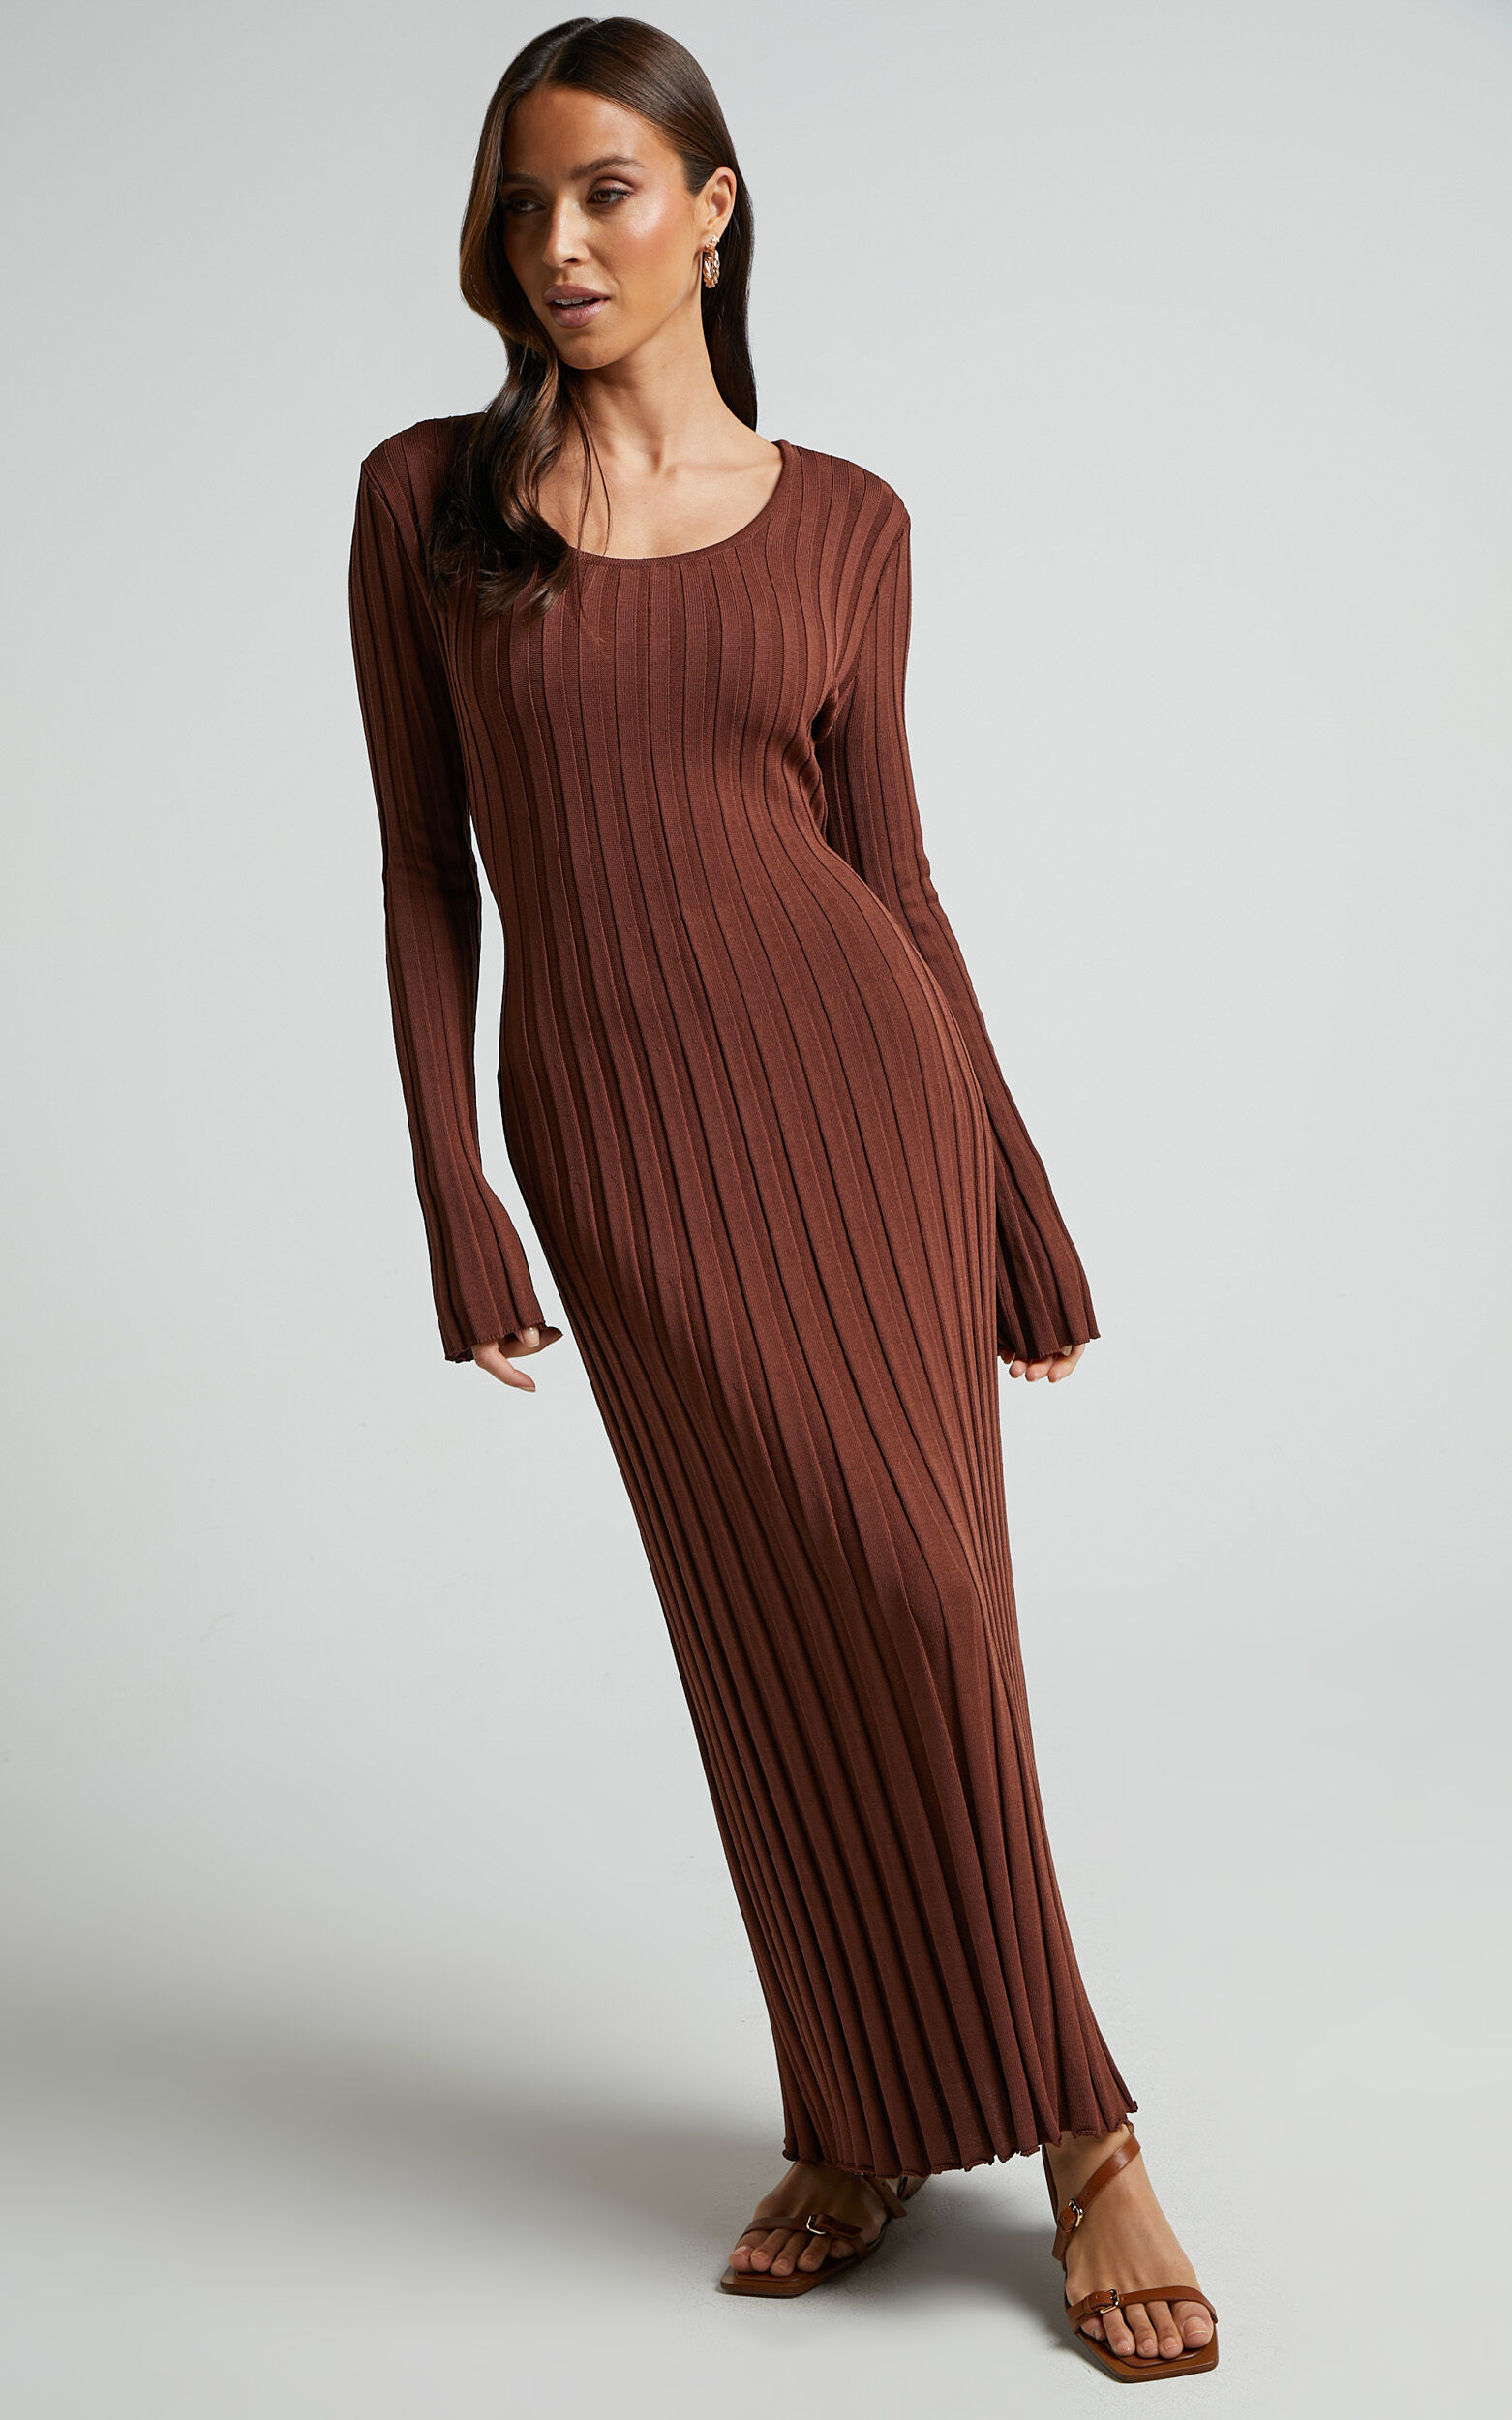 Blaire Midi Dress - Long Sleeve Tie Back Flare Dress in Chocolate